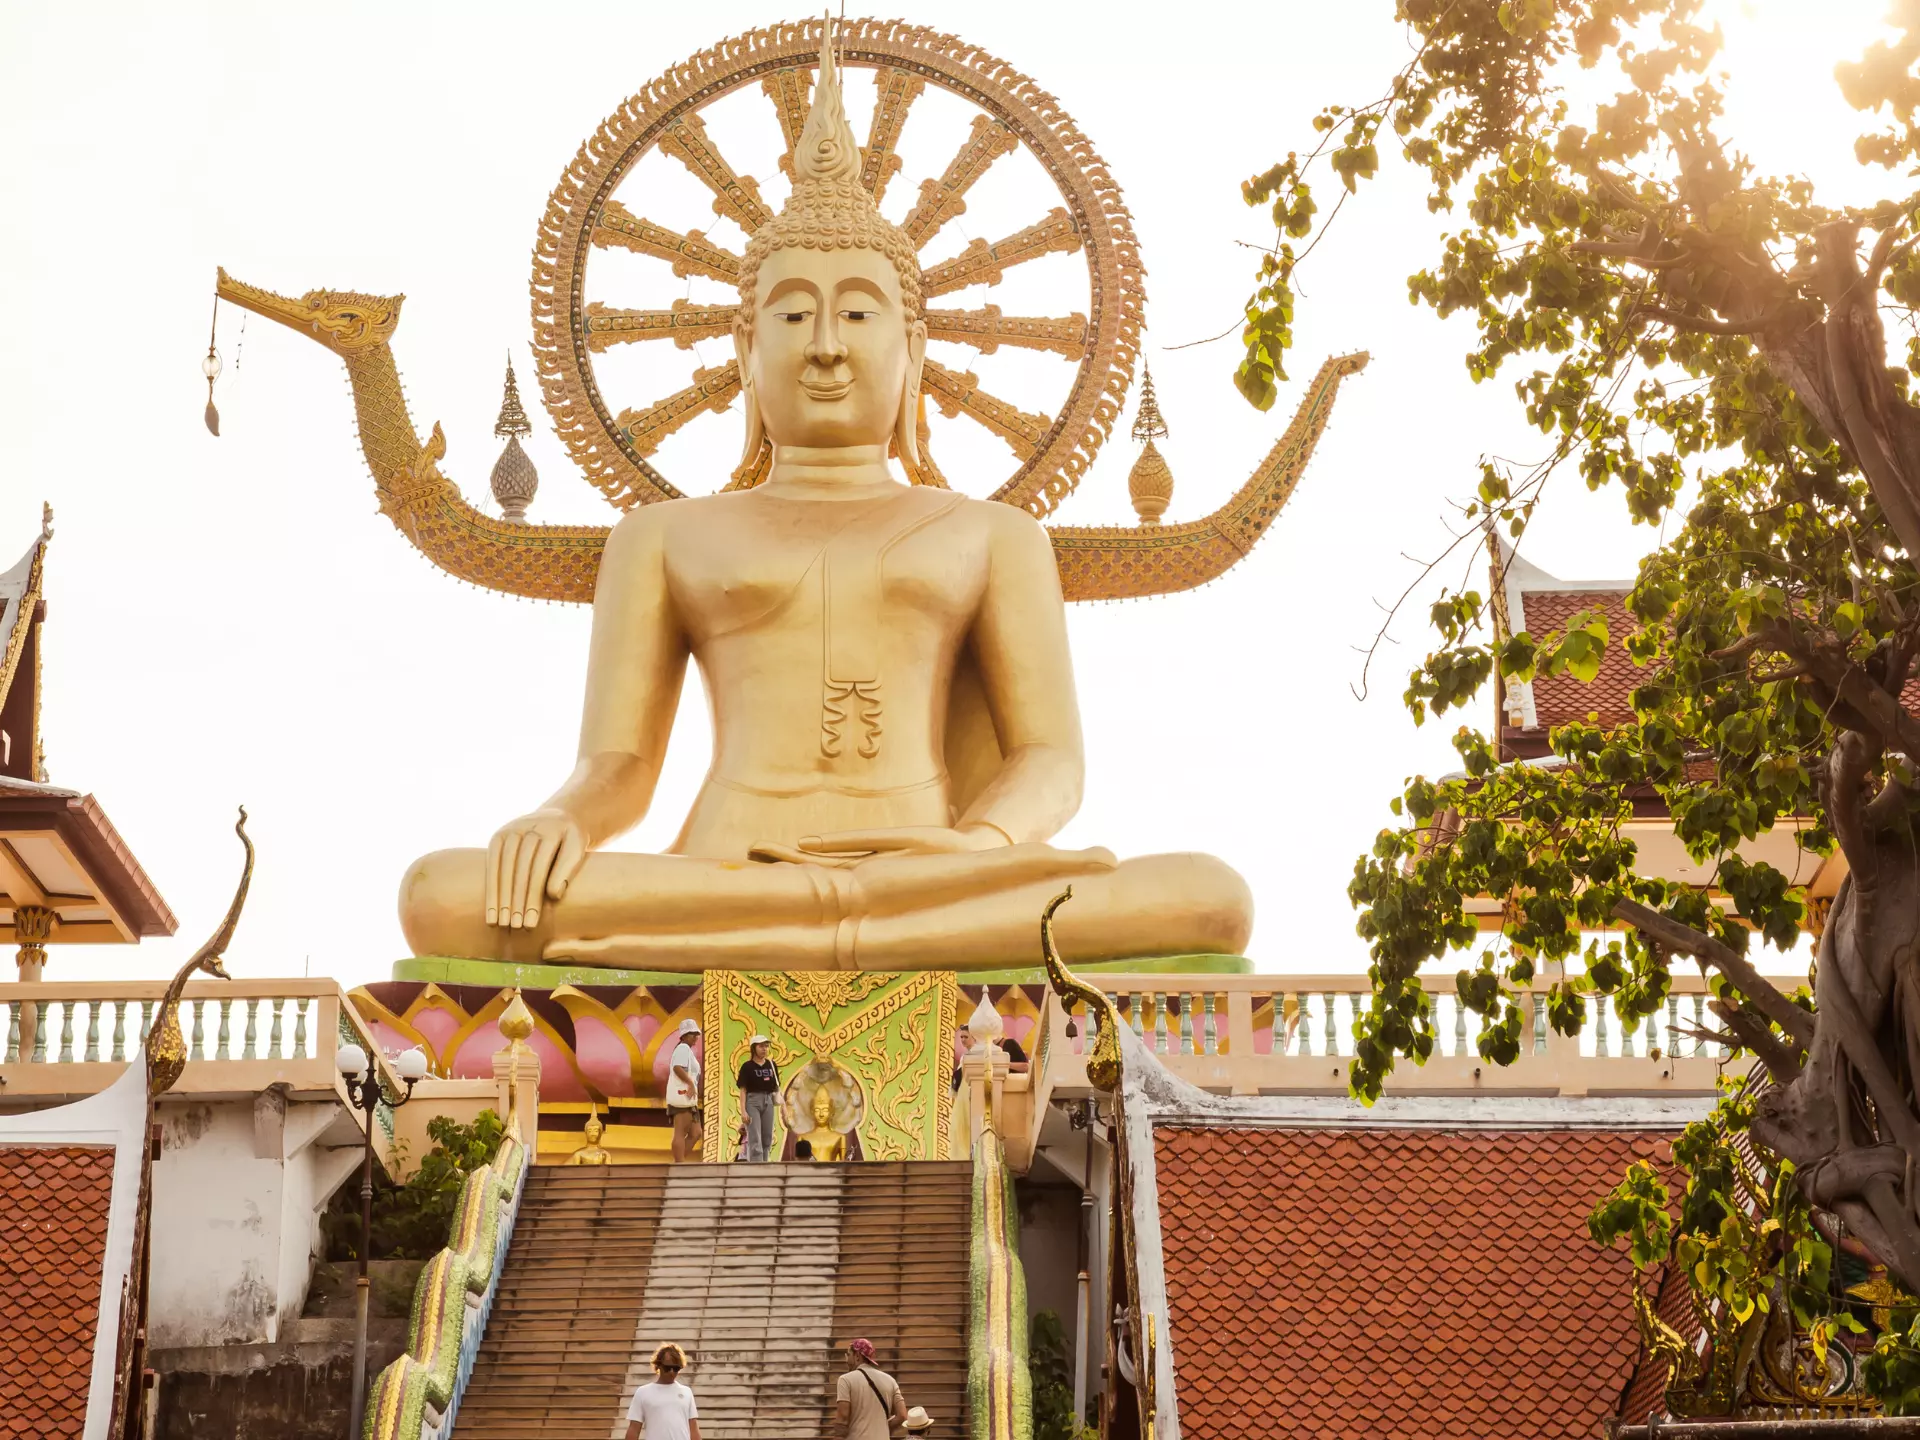 The Big Buddha Temple (Wat Phra Yai) which is a 12-metre tall golden Buddha statue